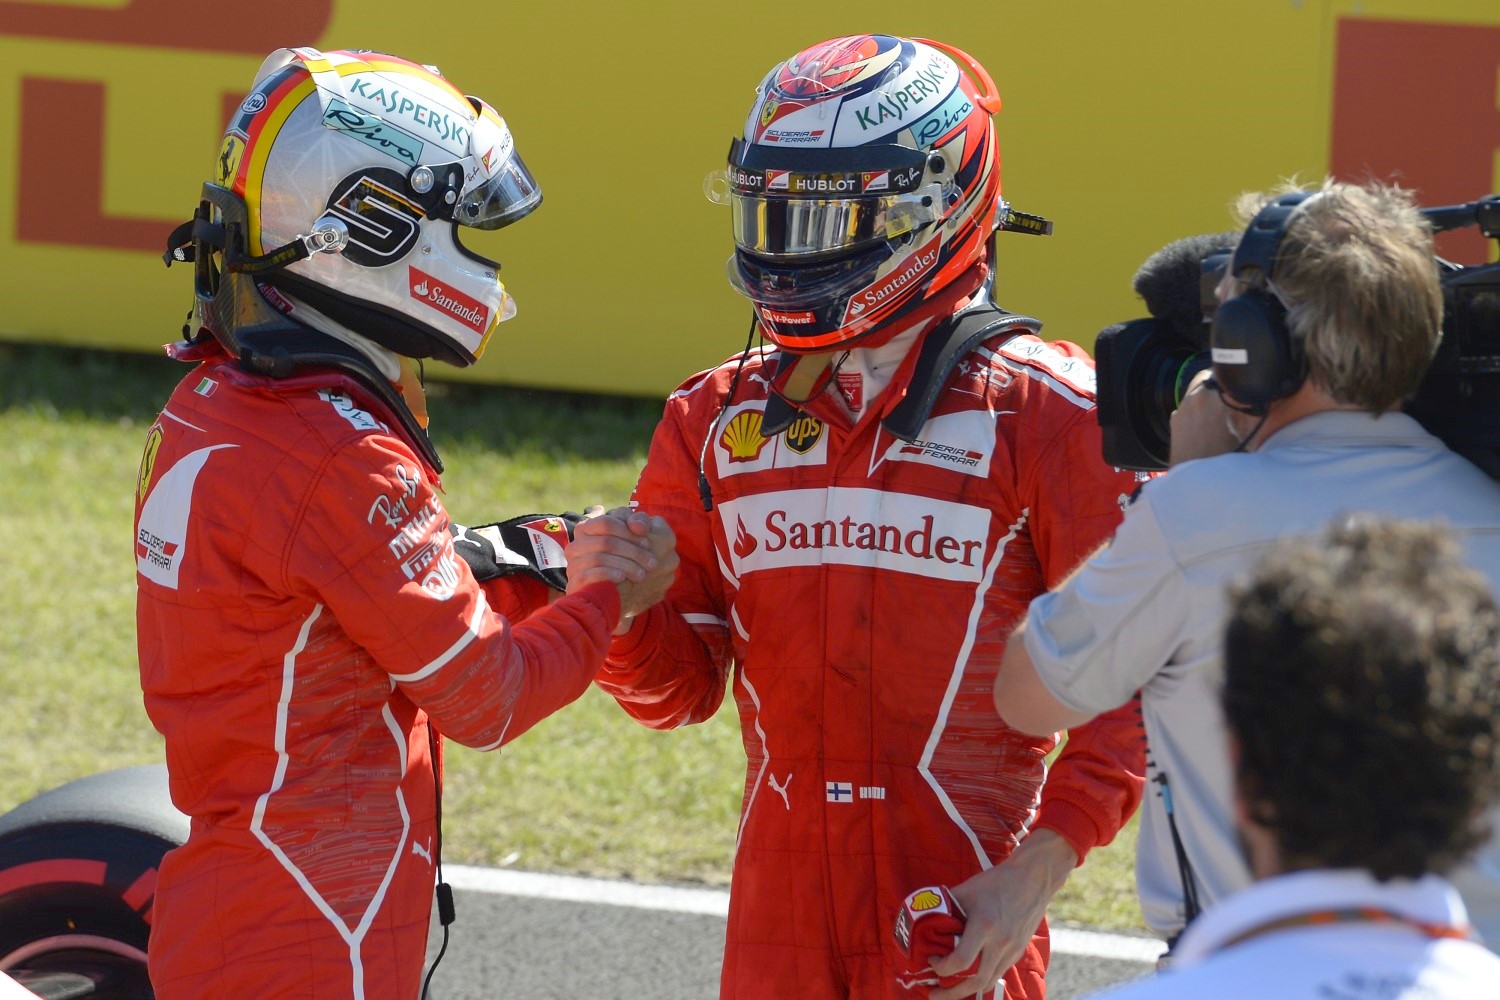 Vettel and Raikkonen